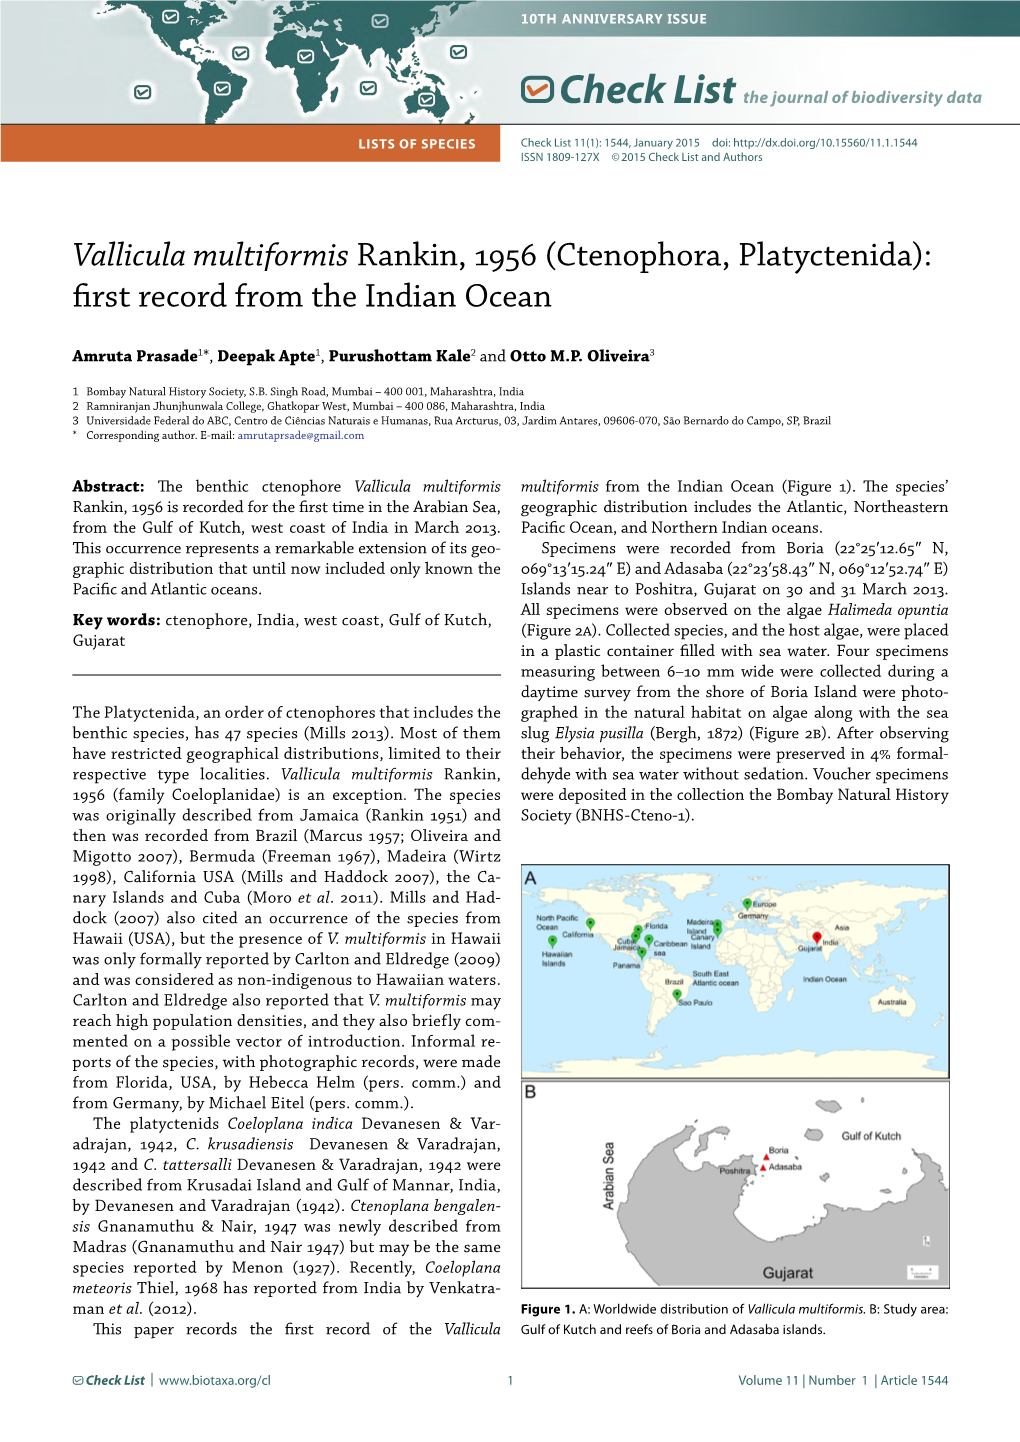 Vallicula Multiformis Rankin, 1956 (Ctenophora, Platyctenida): First Record from the Indian Ocean